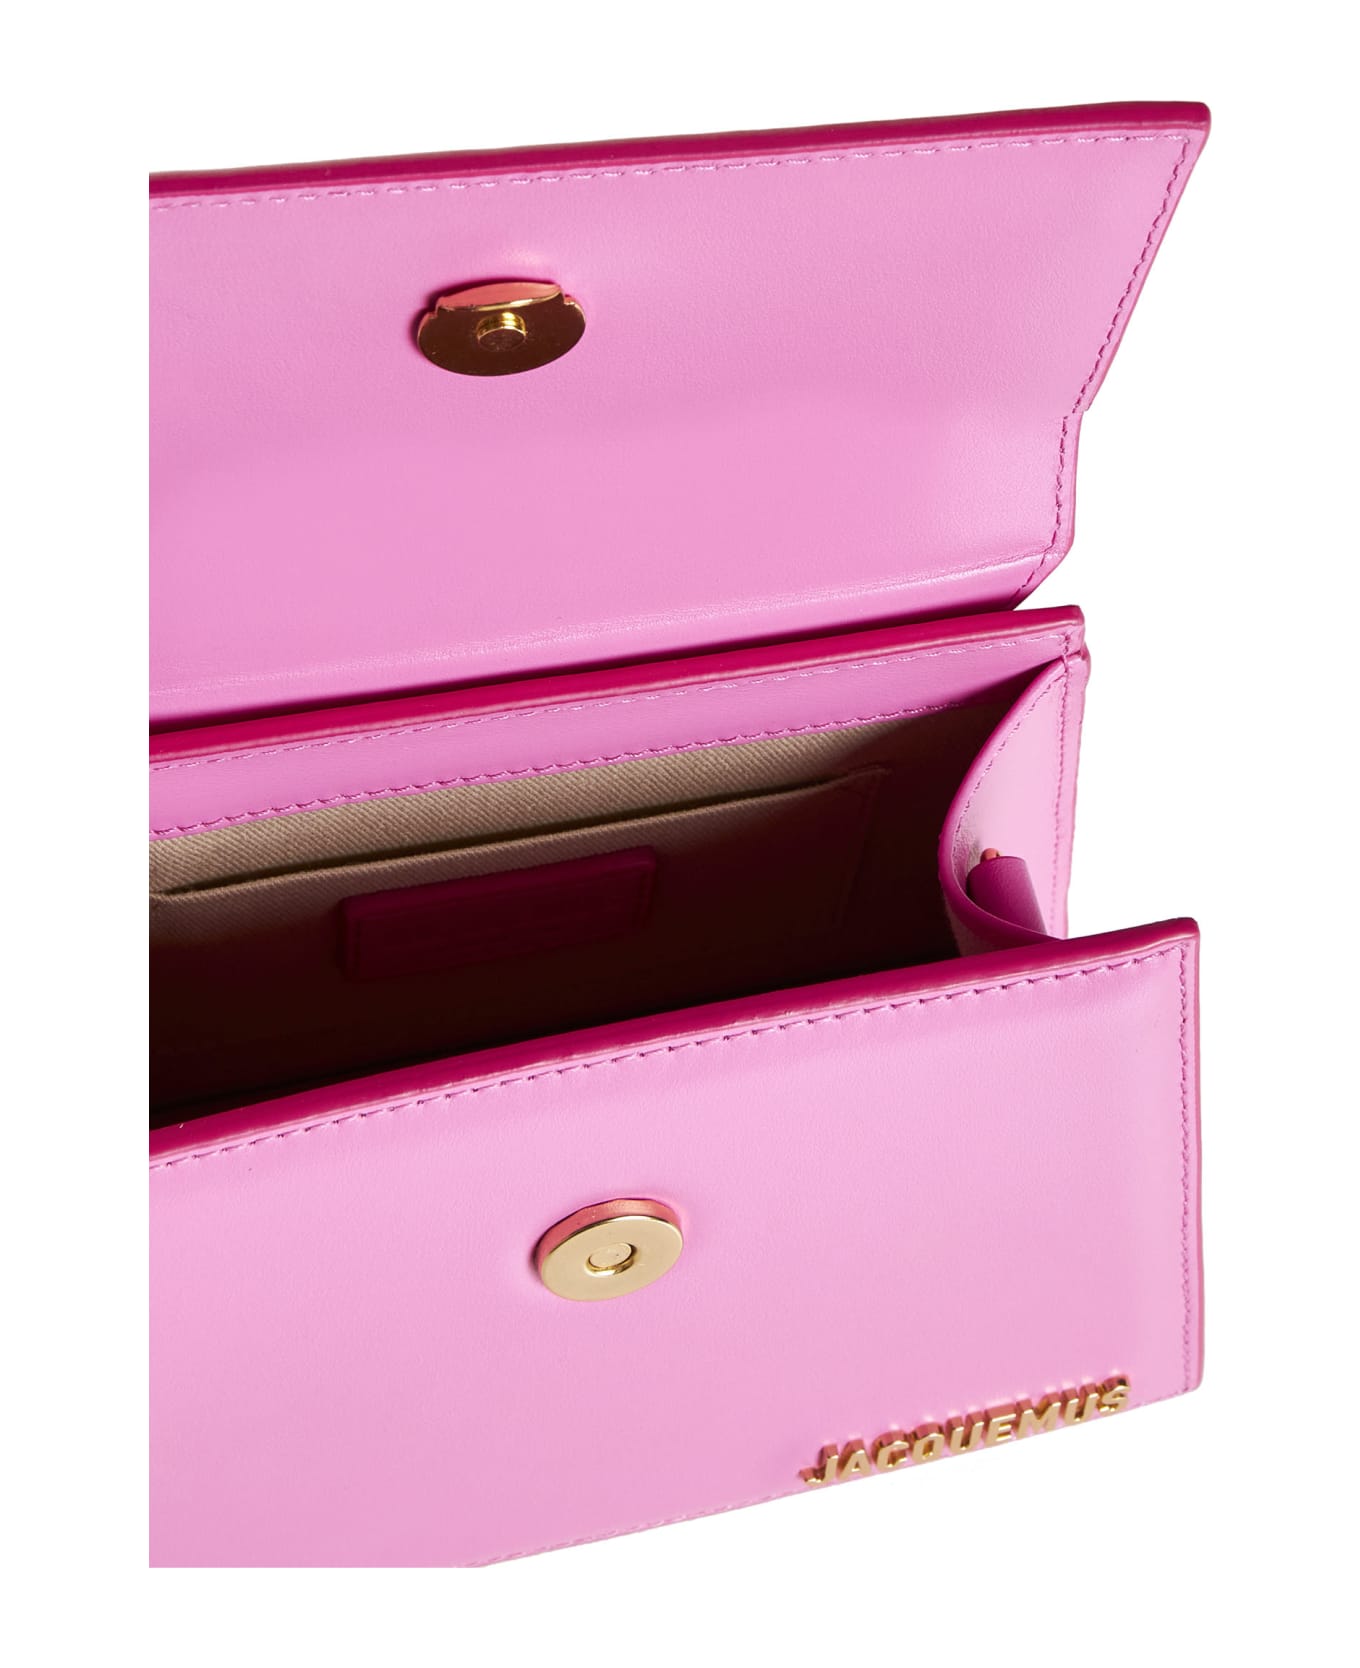 Jacquemus Le Chiquito Noeud Leather Shoulder Bag - Neon pink